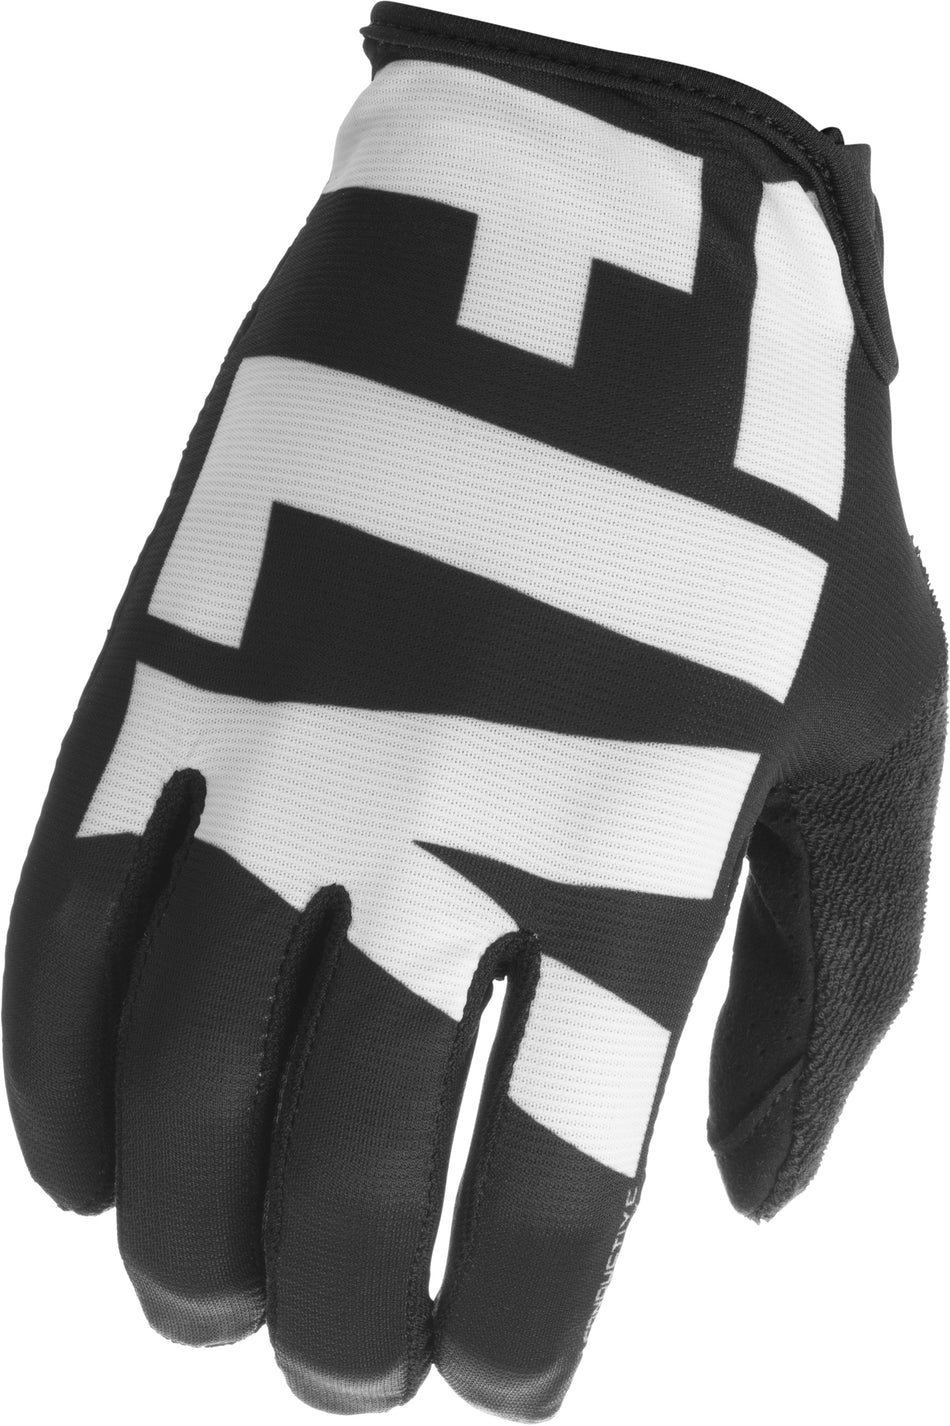 FLY RACING Media Gloves Black/White Sz 12 350-10412